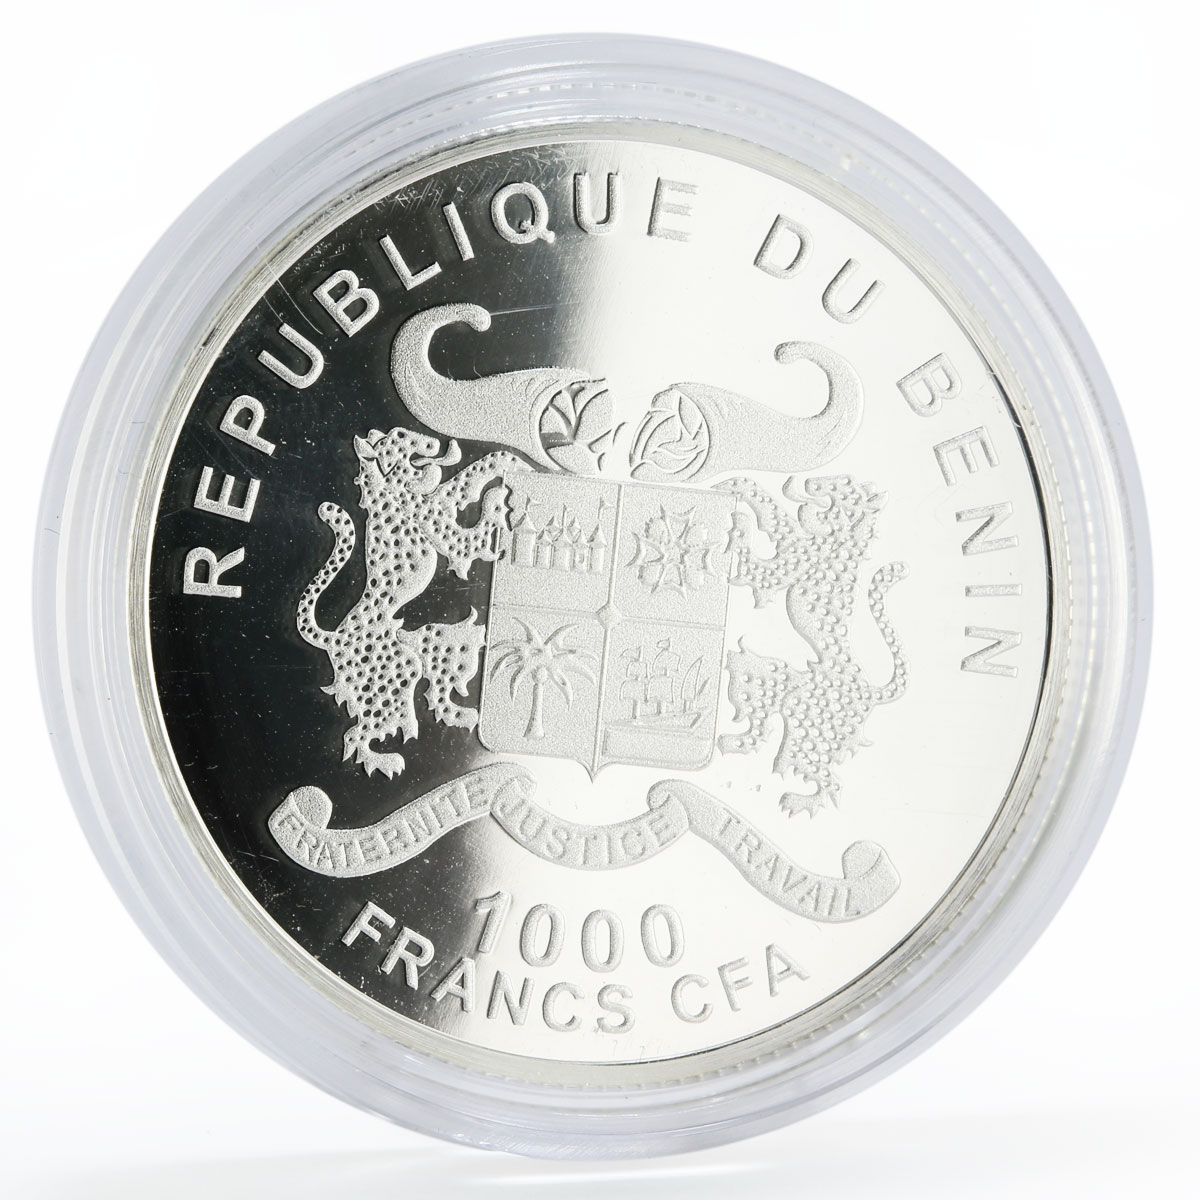 Benin 1000 francs Romantic Places London colored silver coin 2014